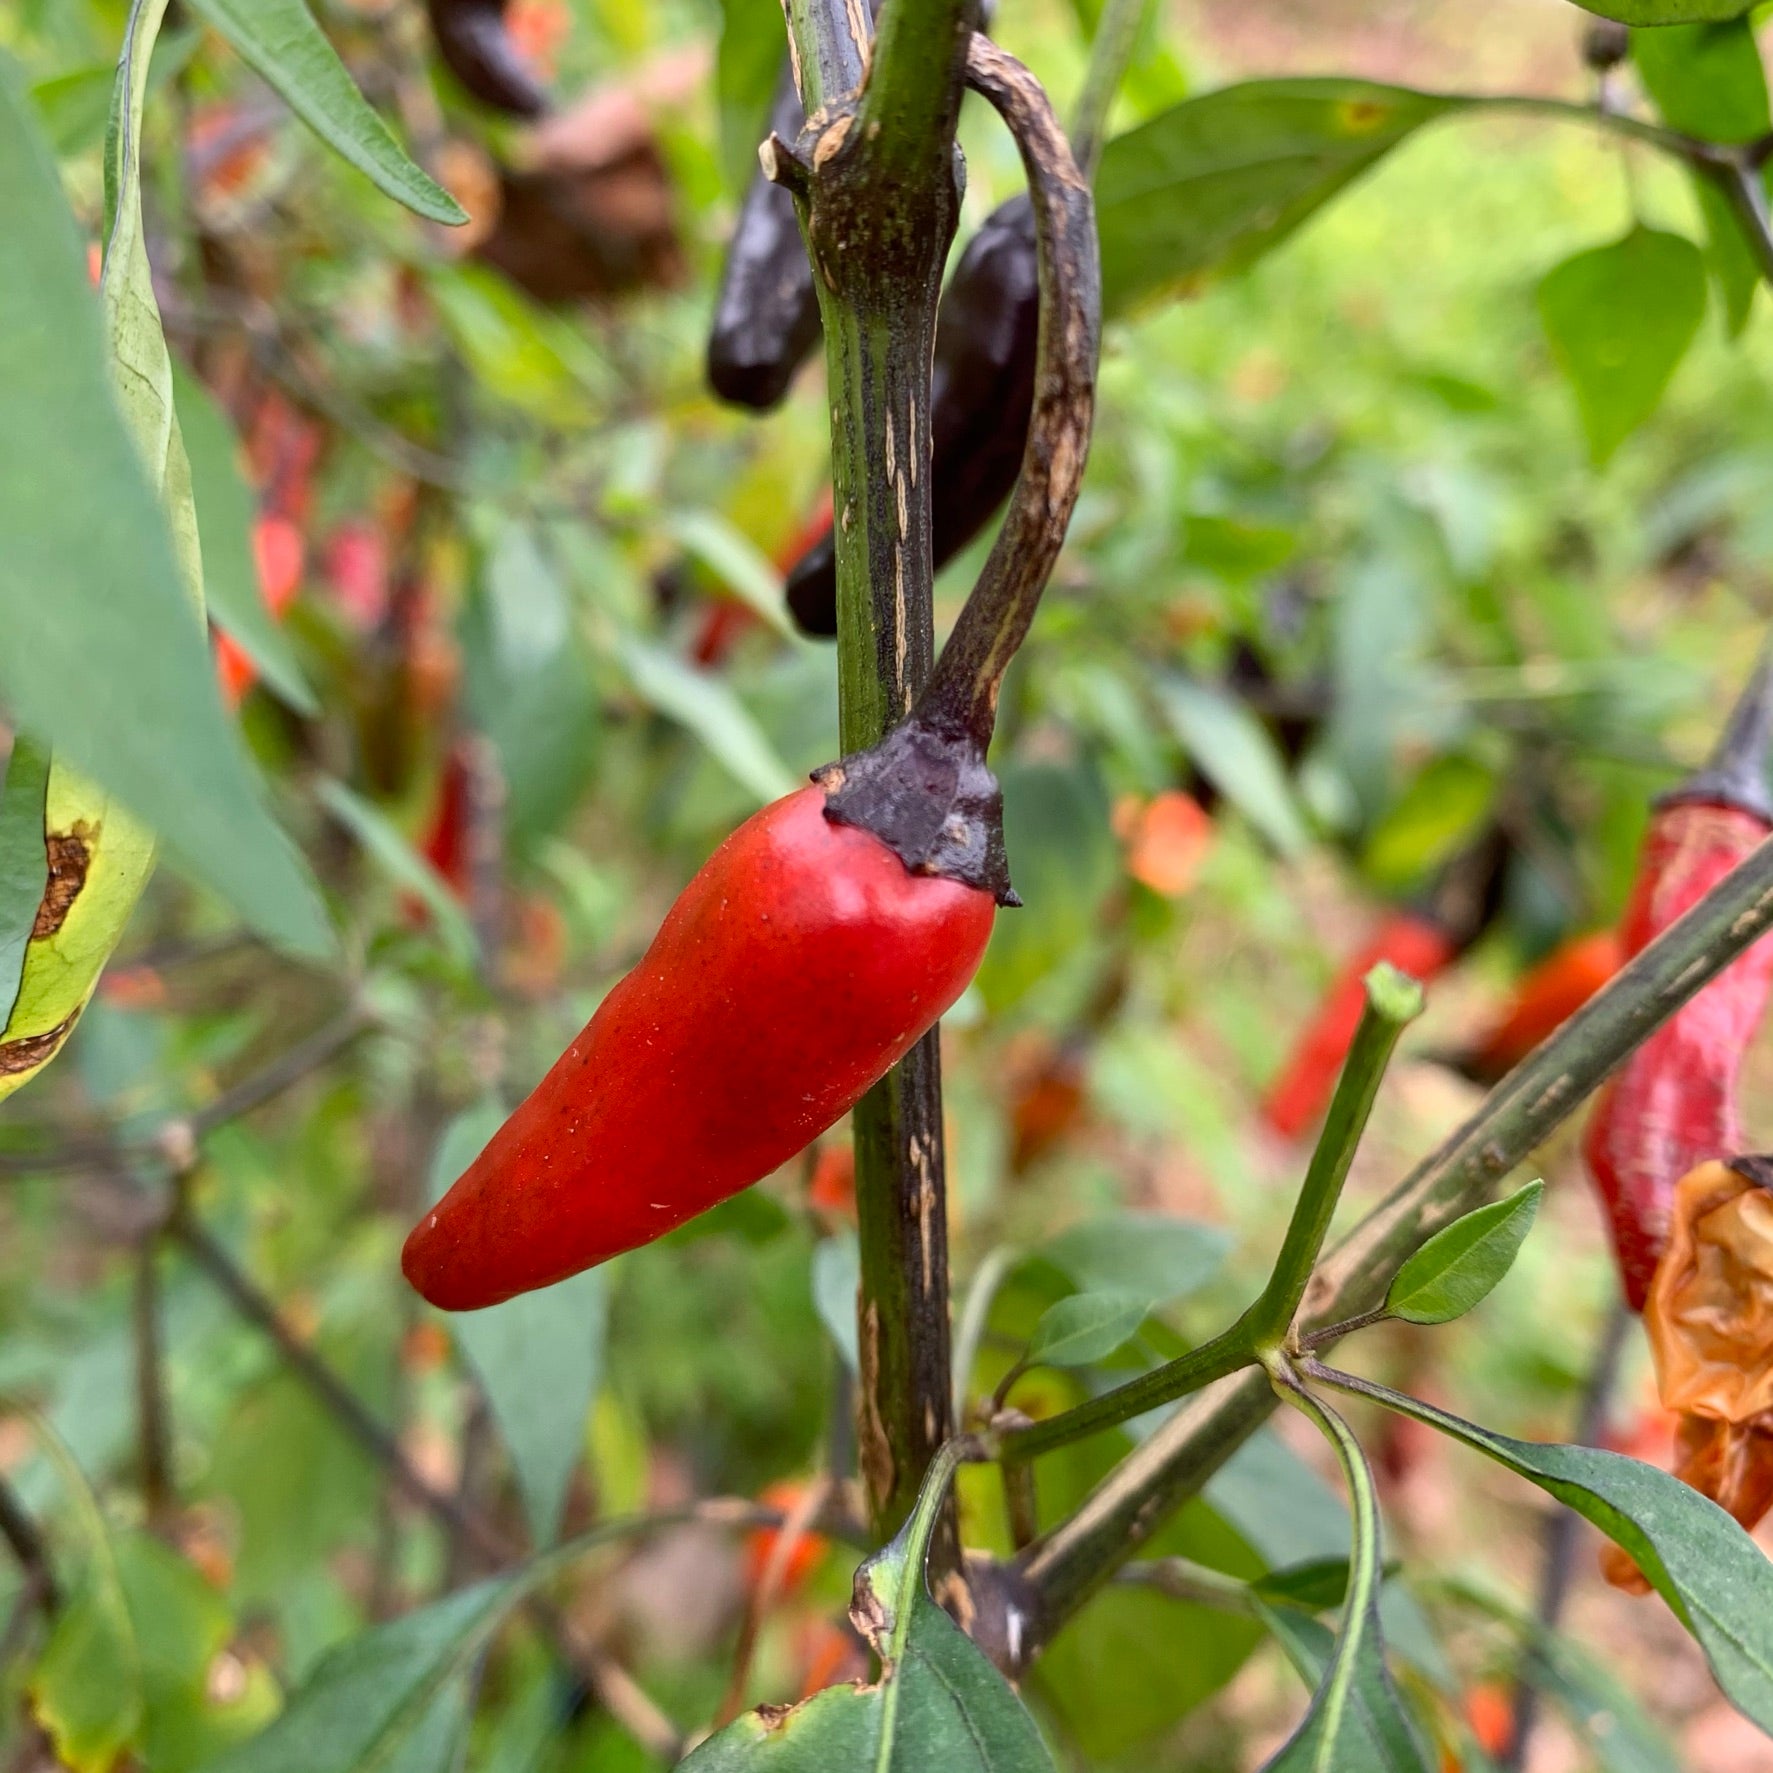 Black Scorpion Tongue - Seeds - Bohica Pepper Hut 